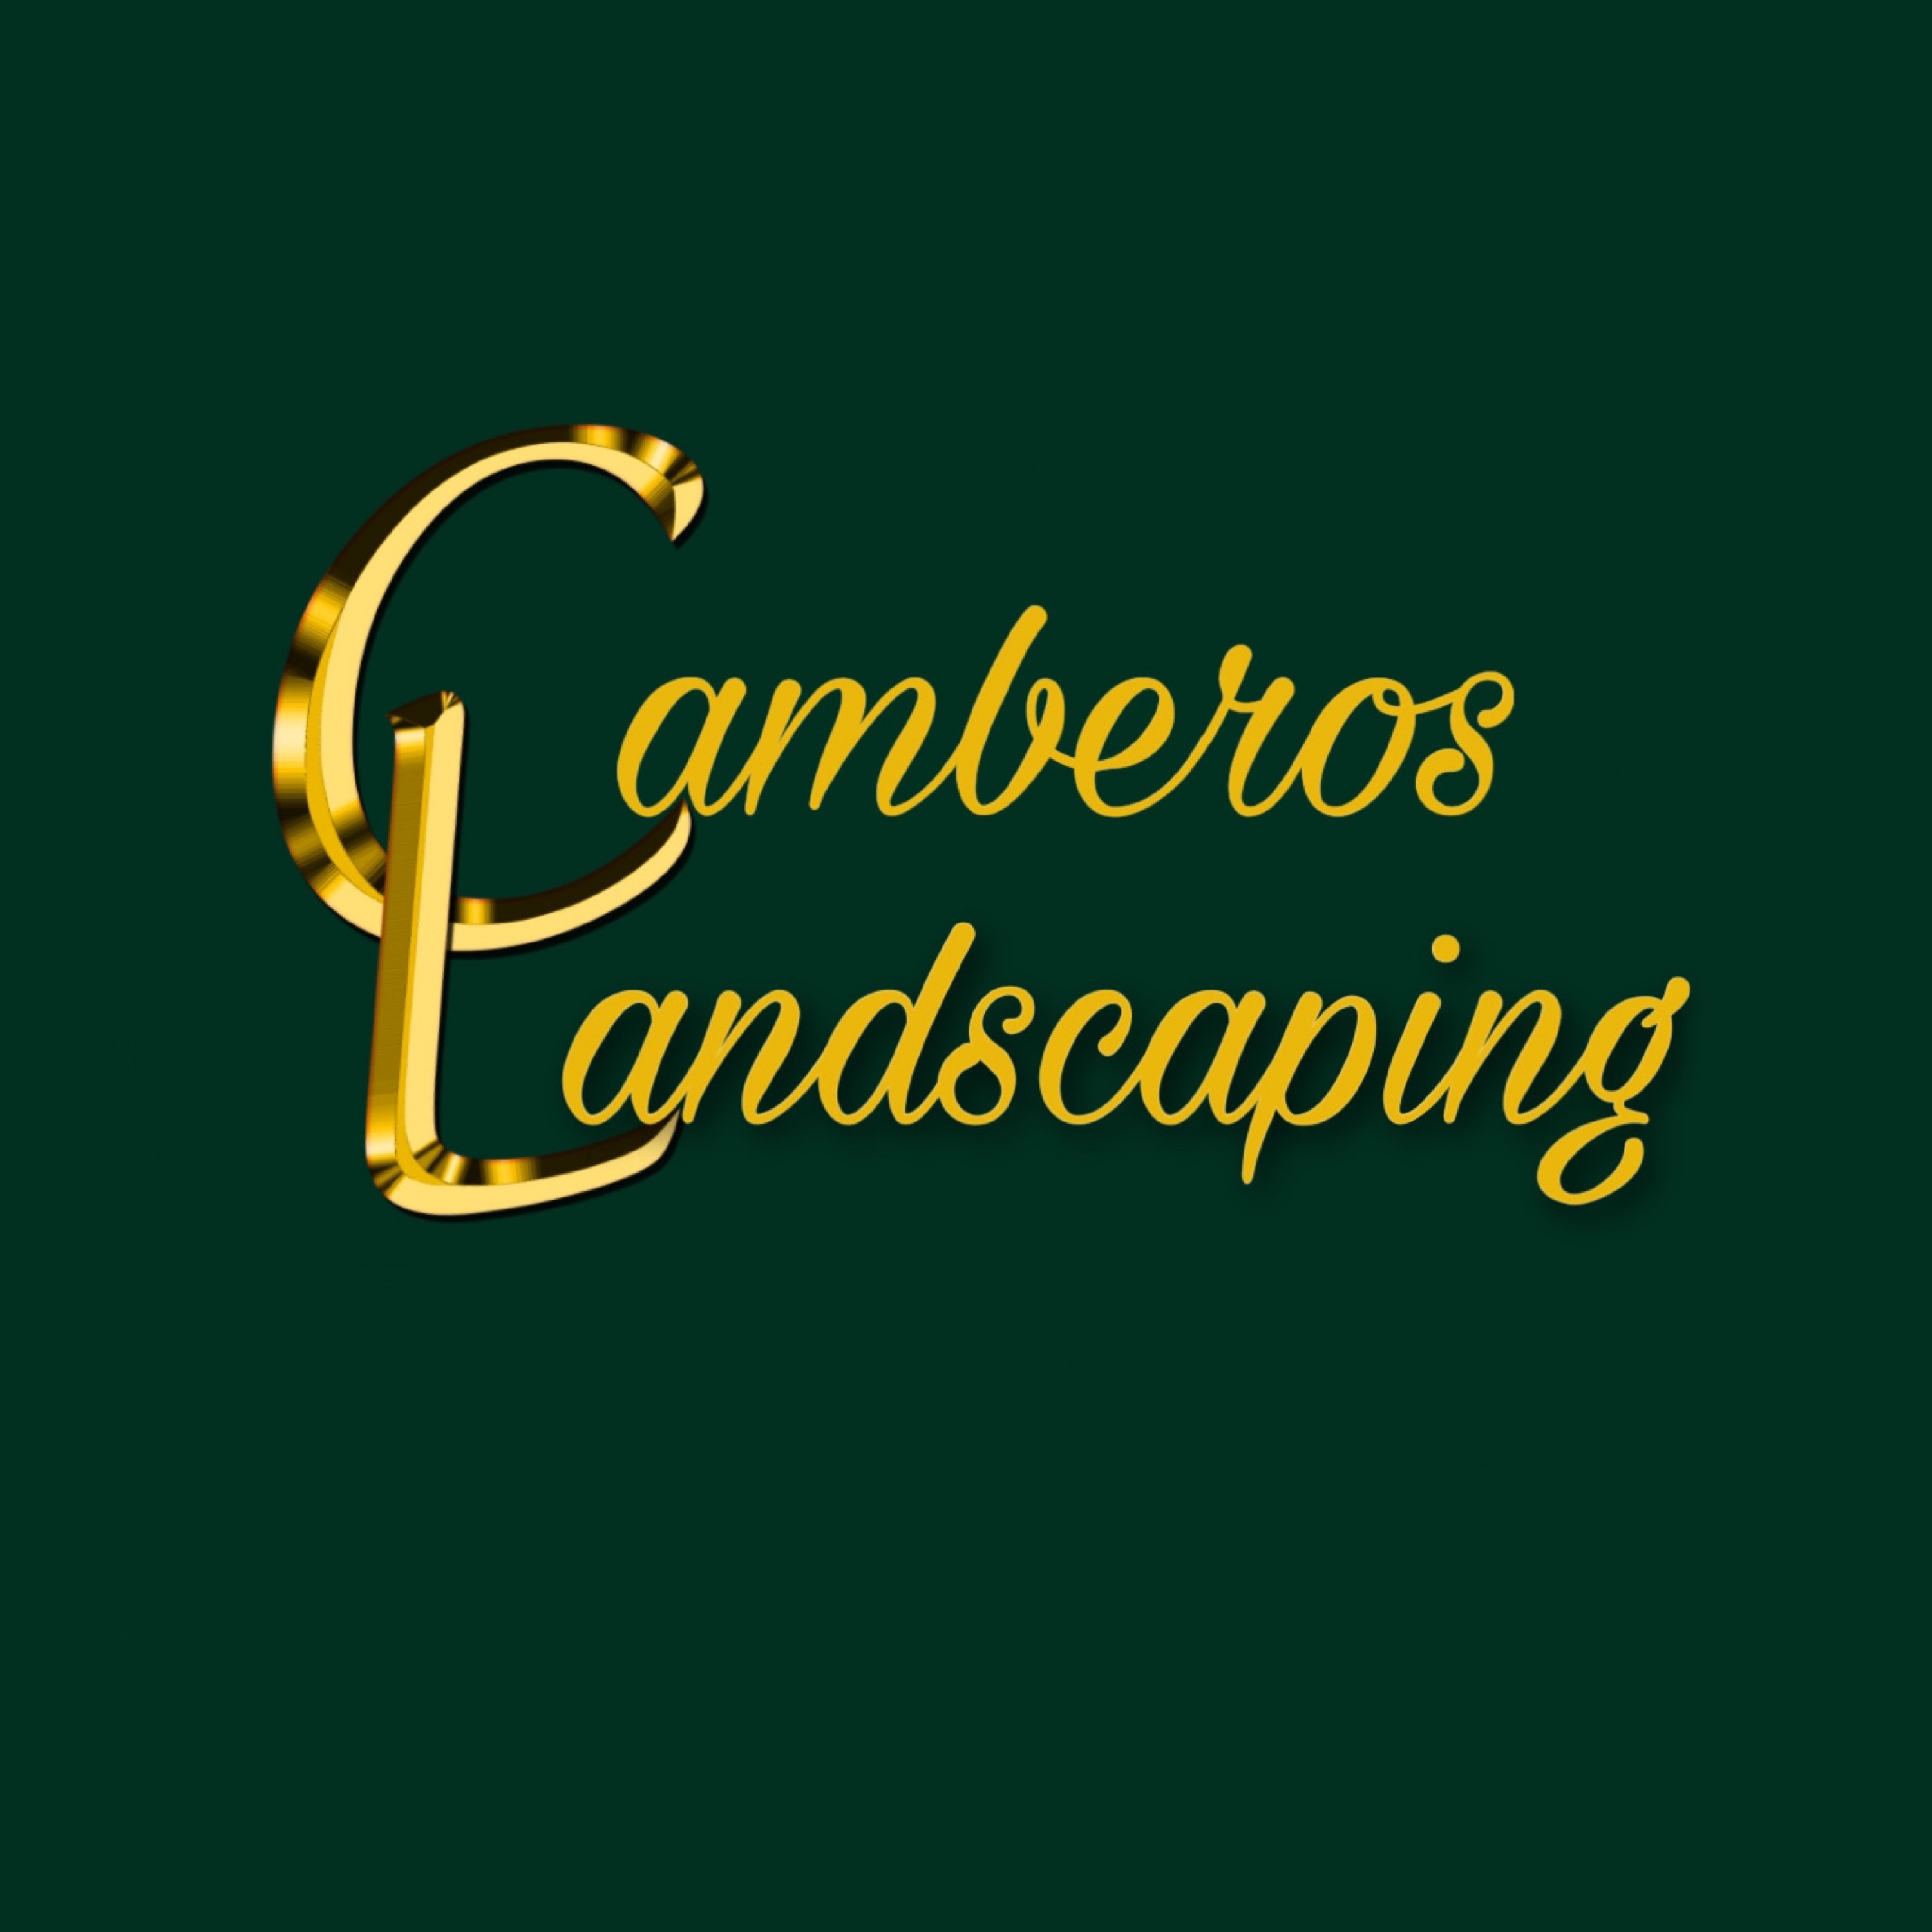 Camberos Landscaping - Unlicensed Contractor Logo